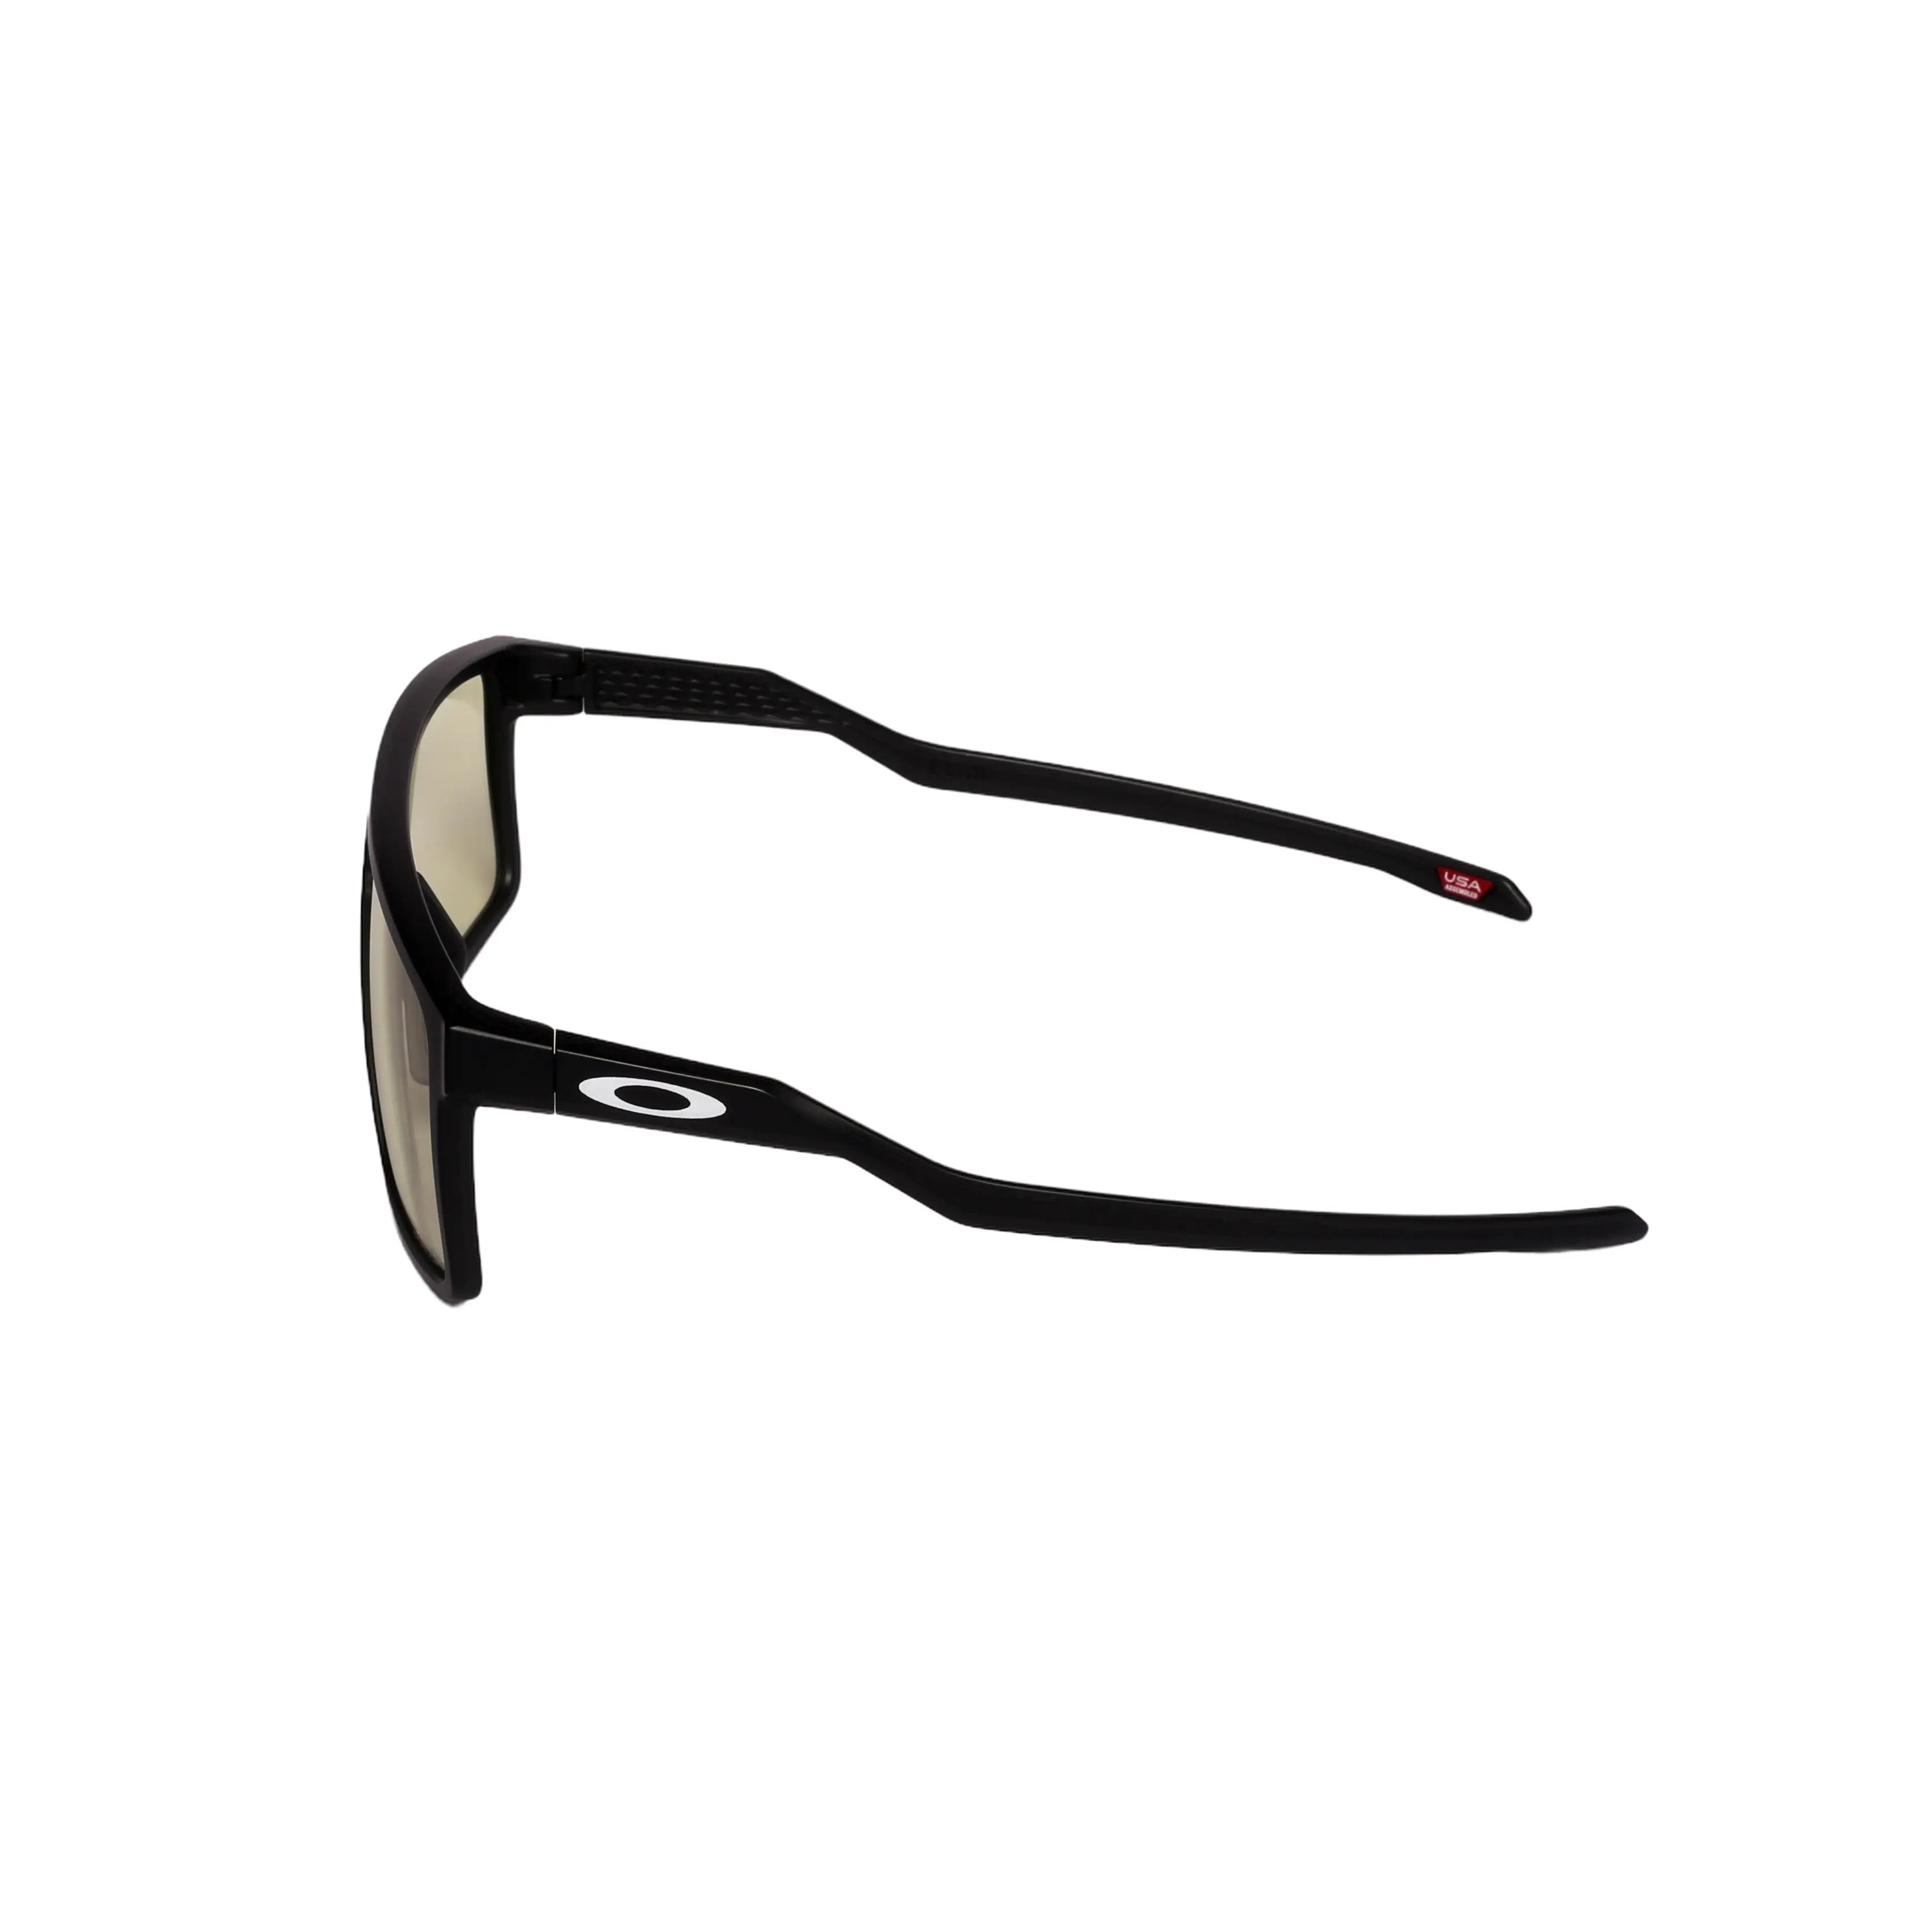 Oakley-OO9285-61-928501 Sunglasses - Premium Sunglasses from Oakley - Just Rs. 9490! Shop now at Laxmi Opticians